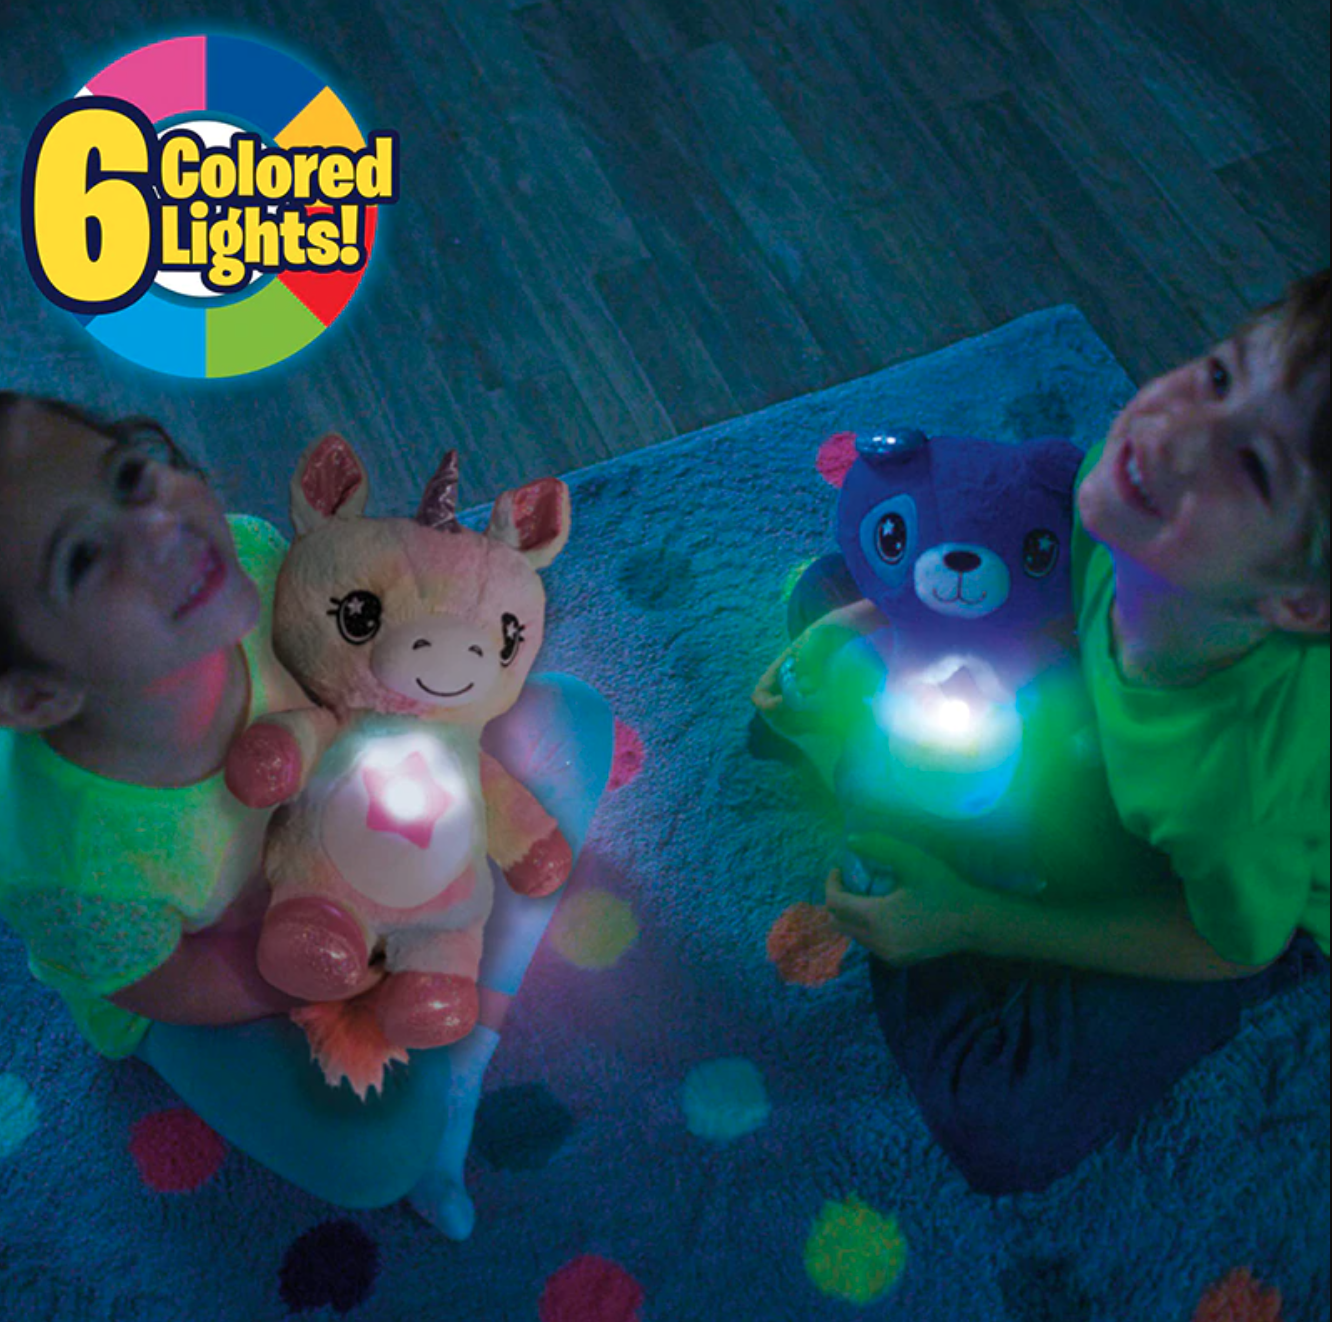 Amy Drop Ship Knuffel Met Licht Projector In Buik Troostende Speelgoed Pluche Speelgoed Nachtlampje Snoezige Puppy Kerstcadeaus